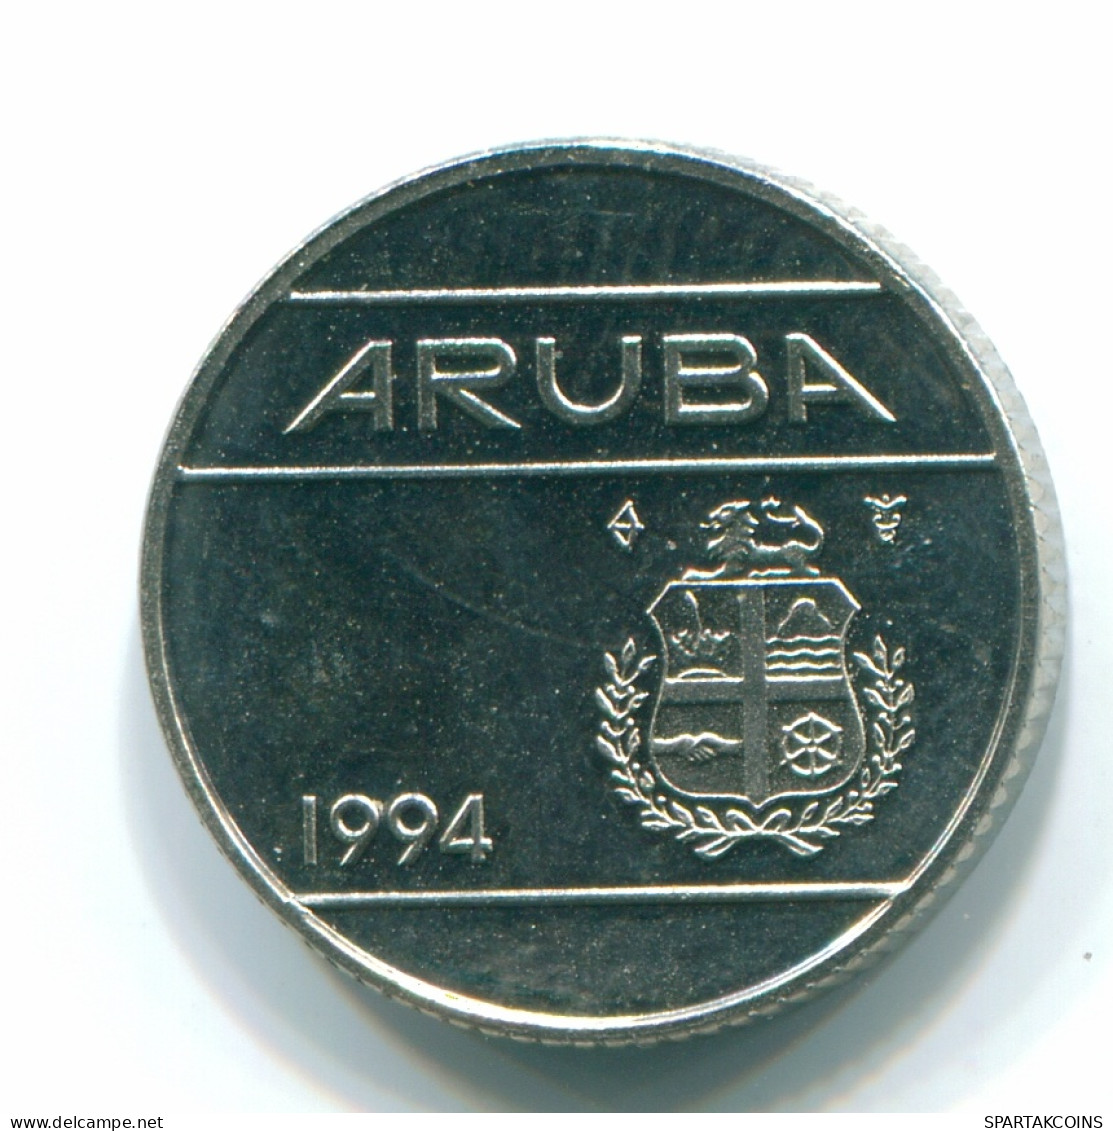 10 CENTS 1994 ARUBA (NÉERLANDAIS NETHERLANDS) Nickel Colonial Pièce #S13633.F - Aruba